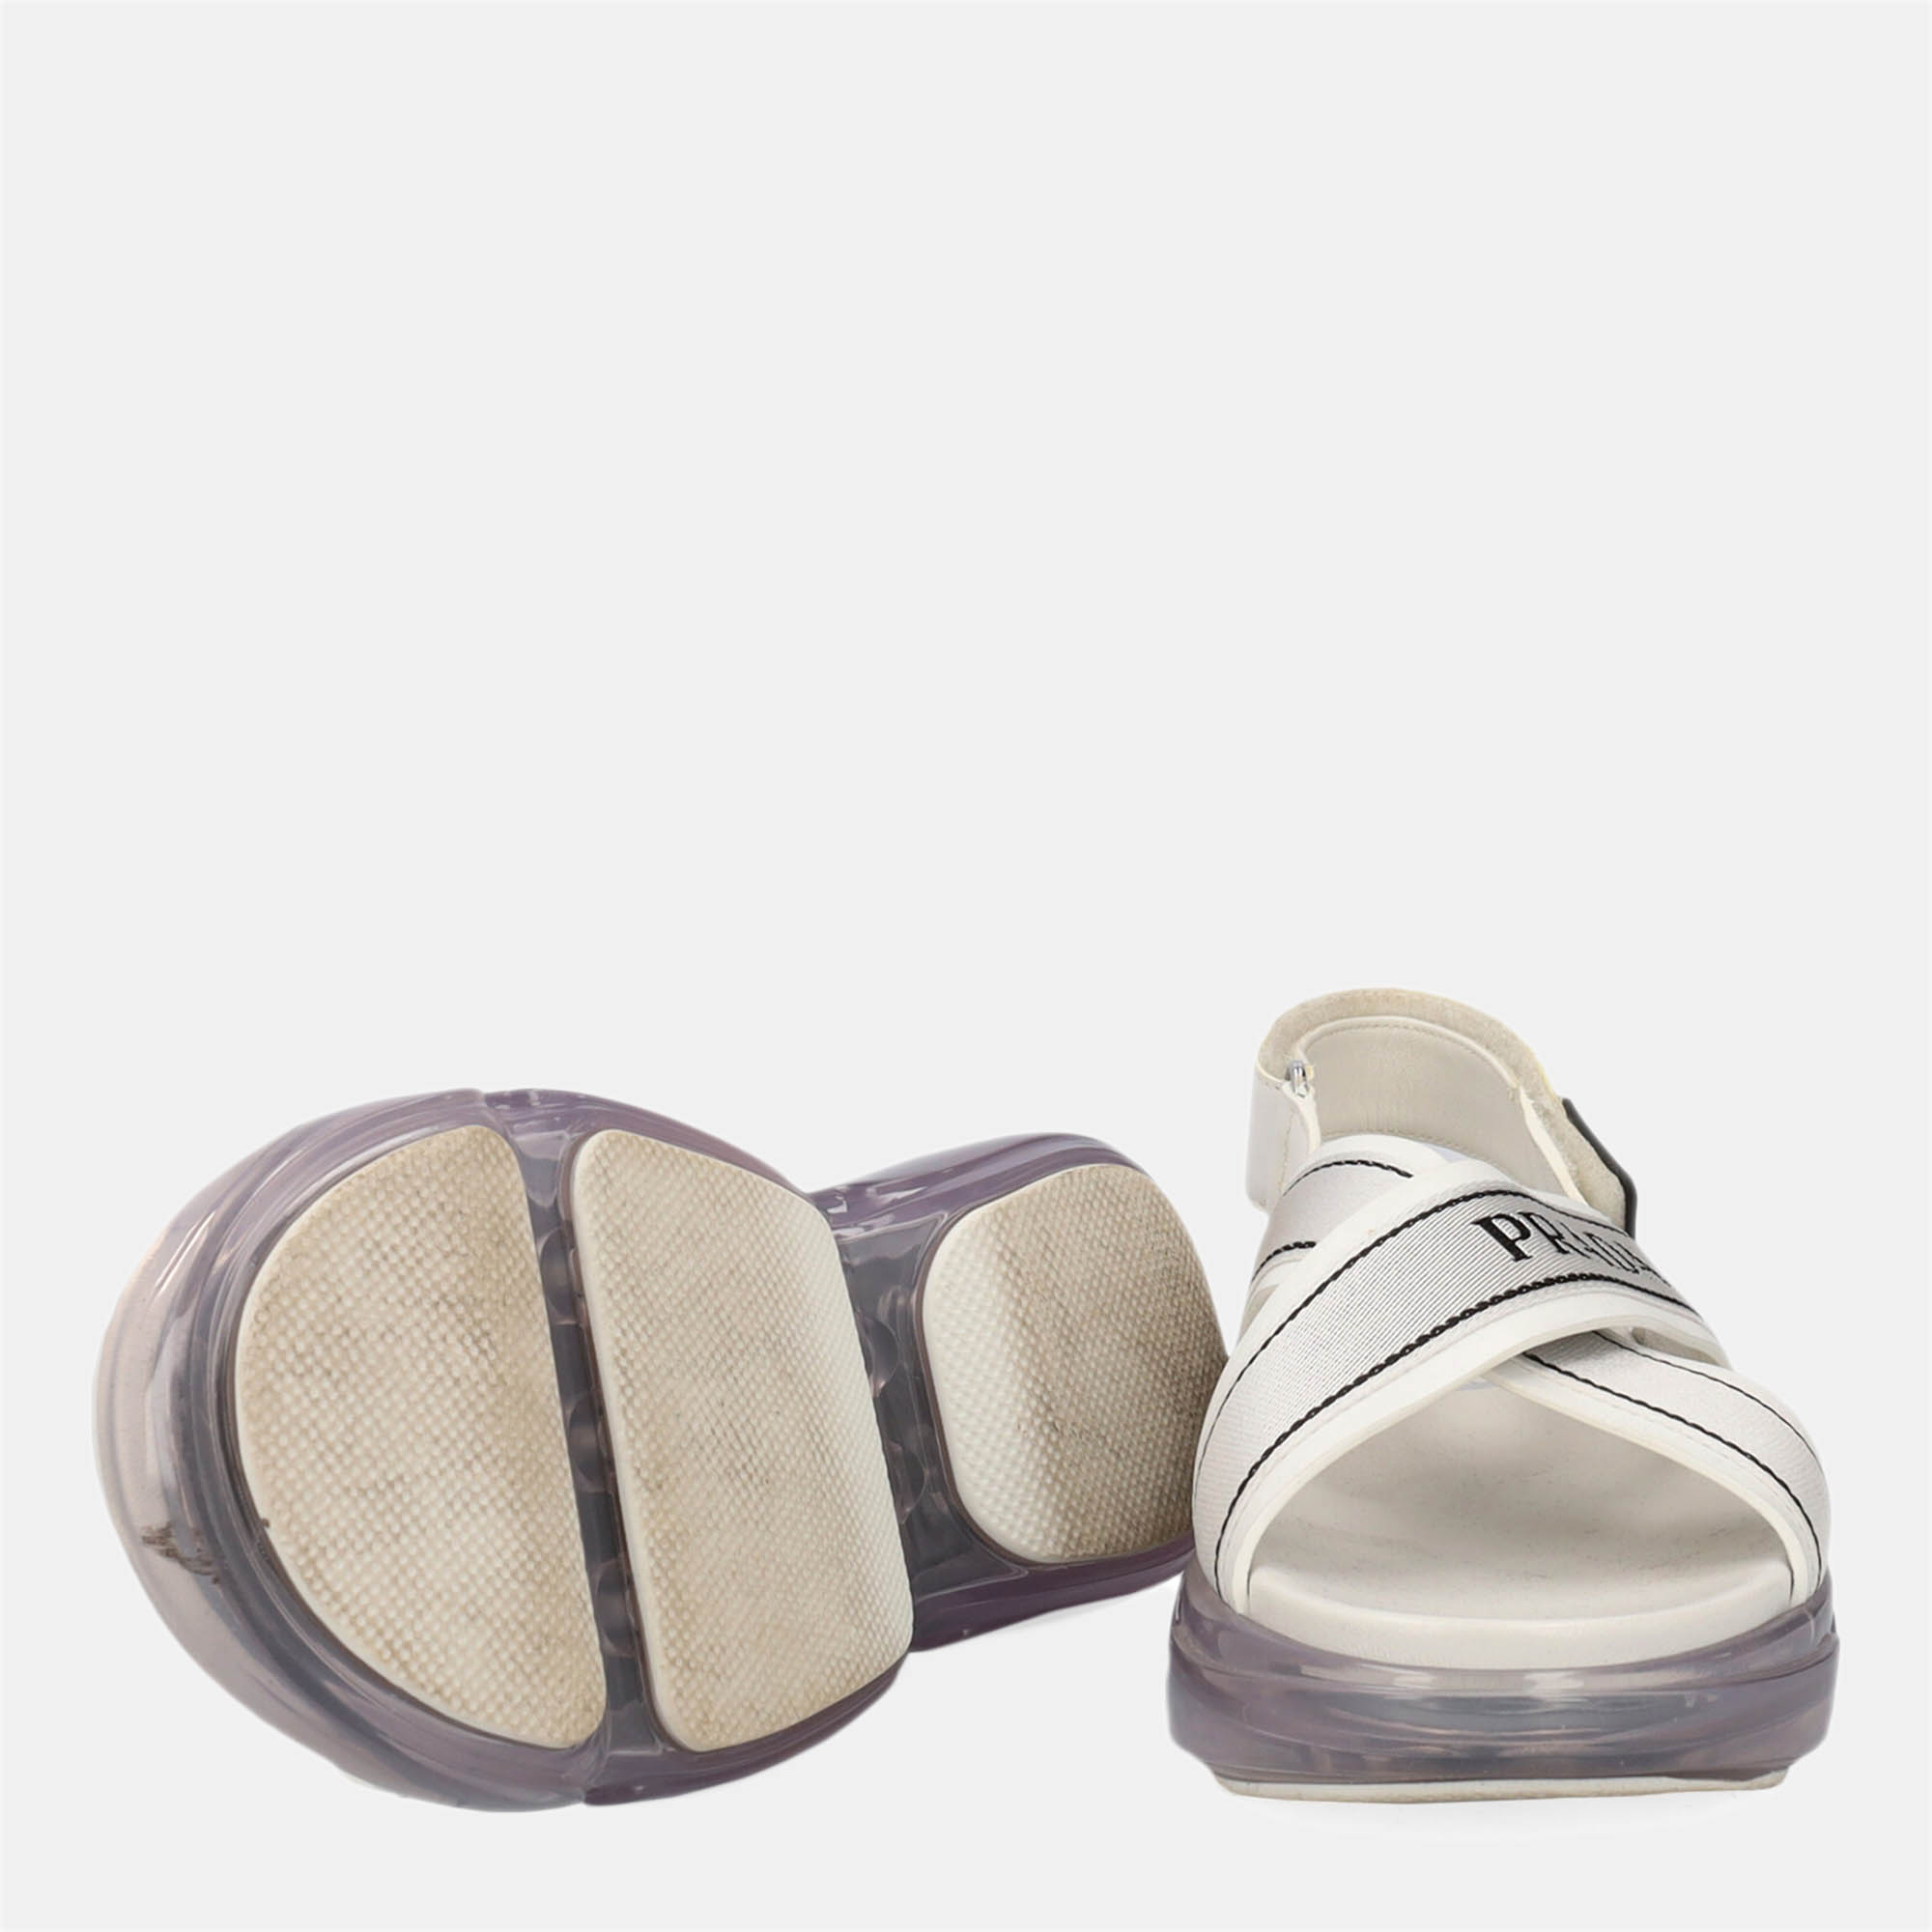 Prada  Women's Synthetic Fibers Sandals - White - EU 39